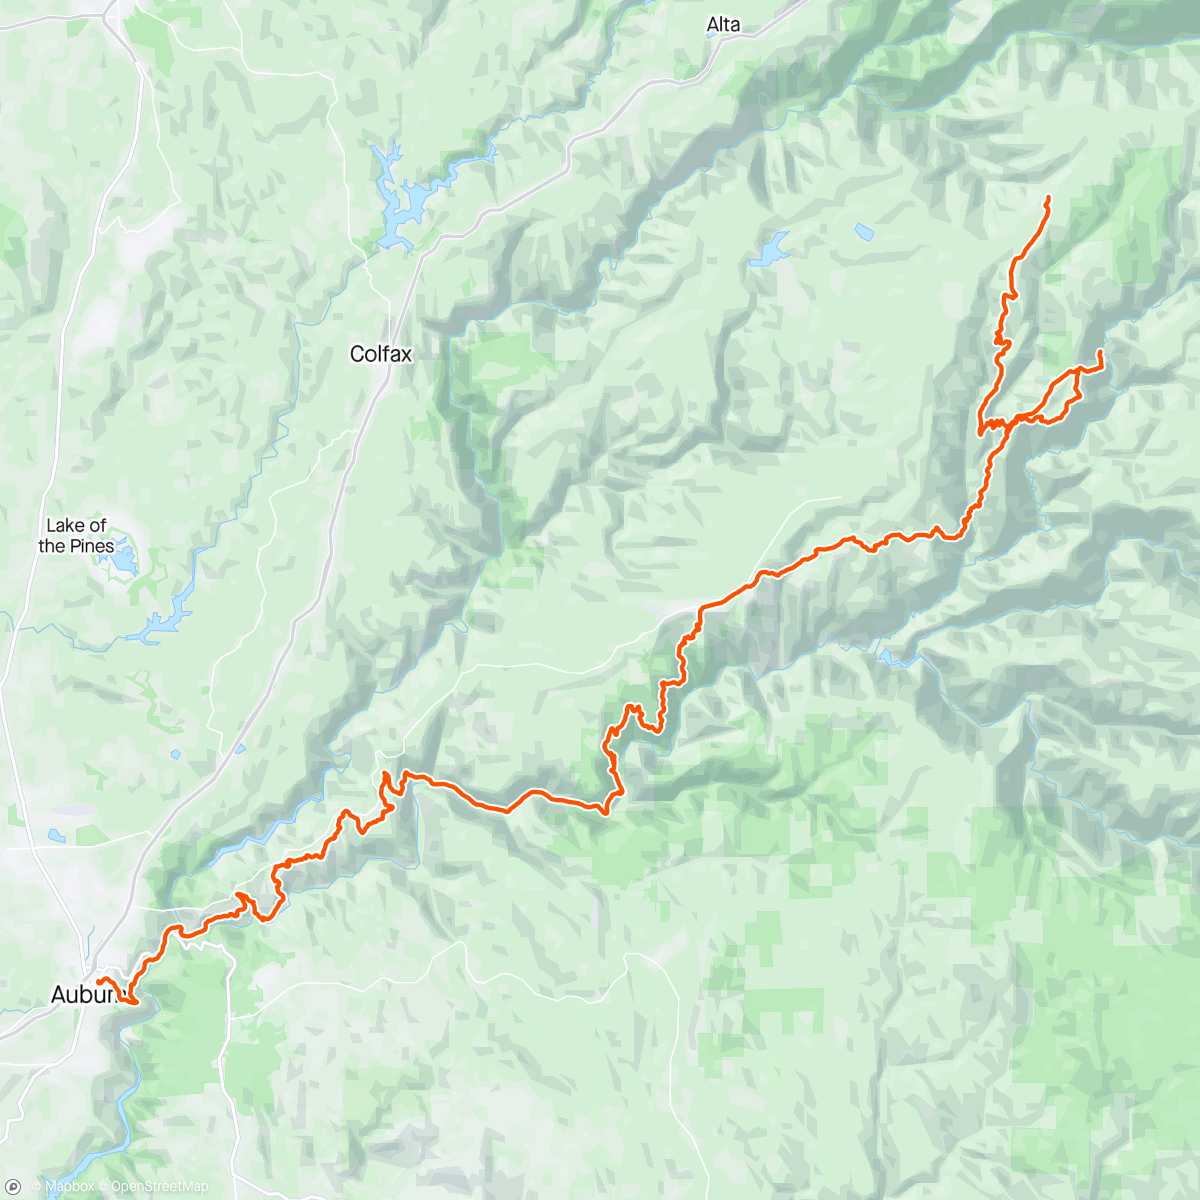 Mappa dell'attività Canyons 100k, bonk and rally